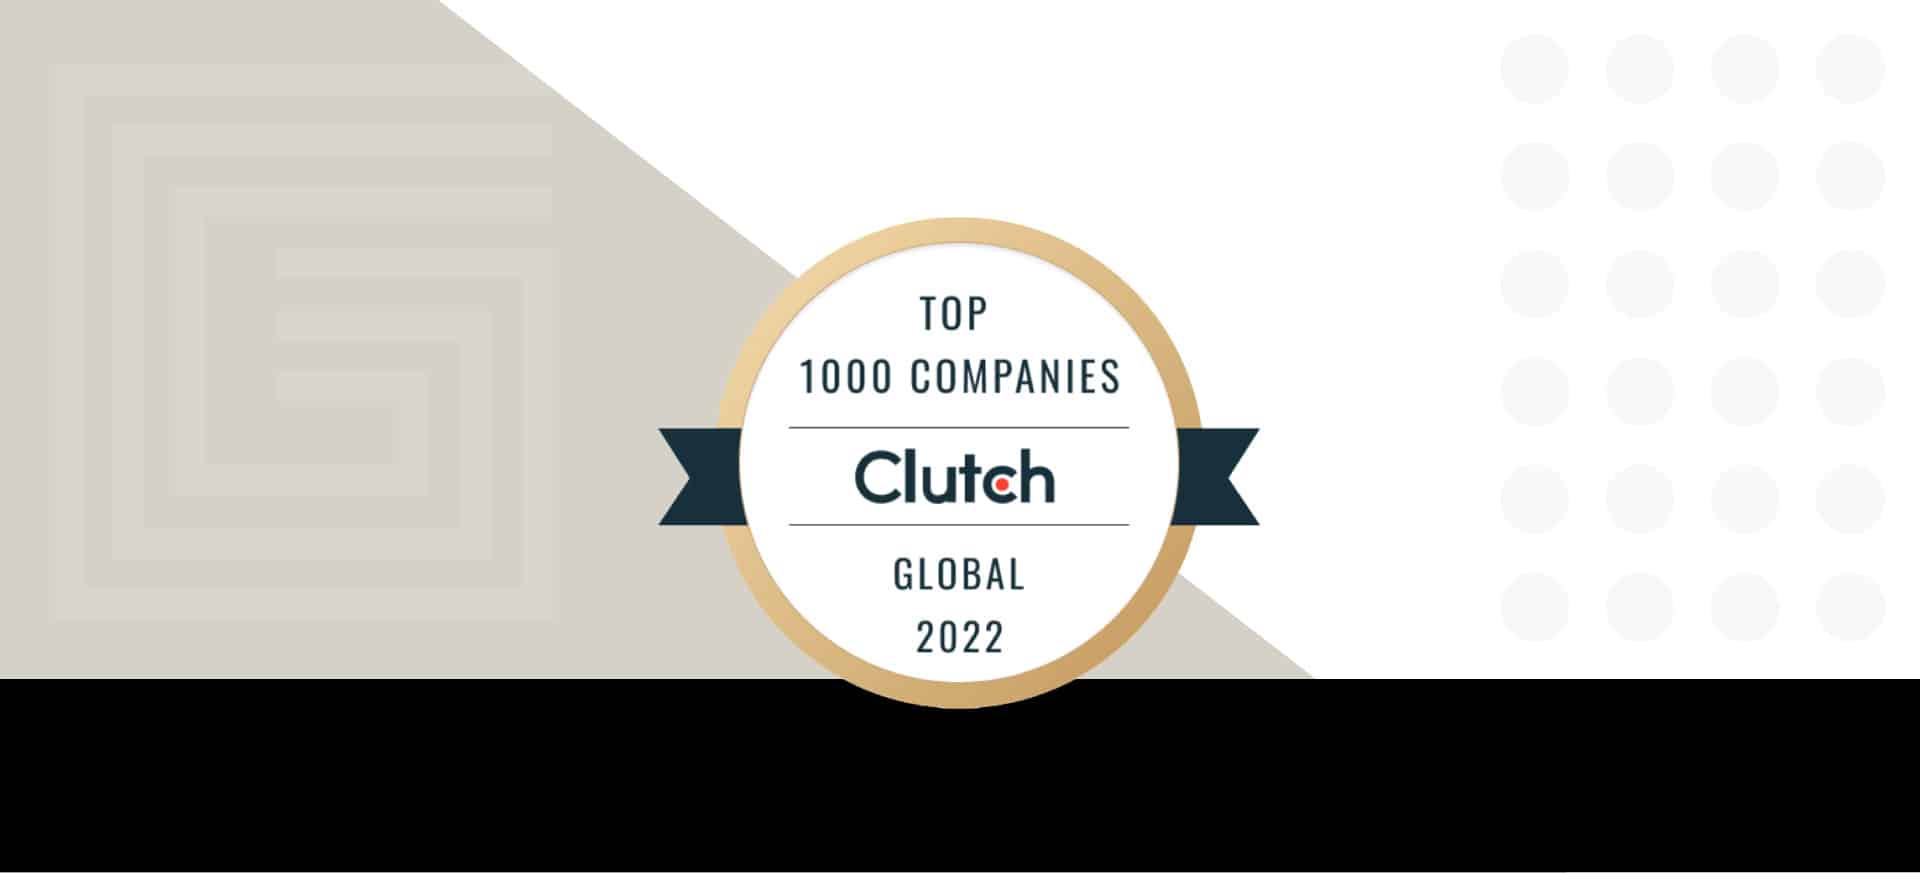 Clutch "Top 1000 Companies - Global 2022" Badge